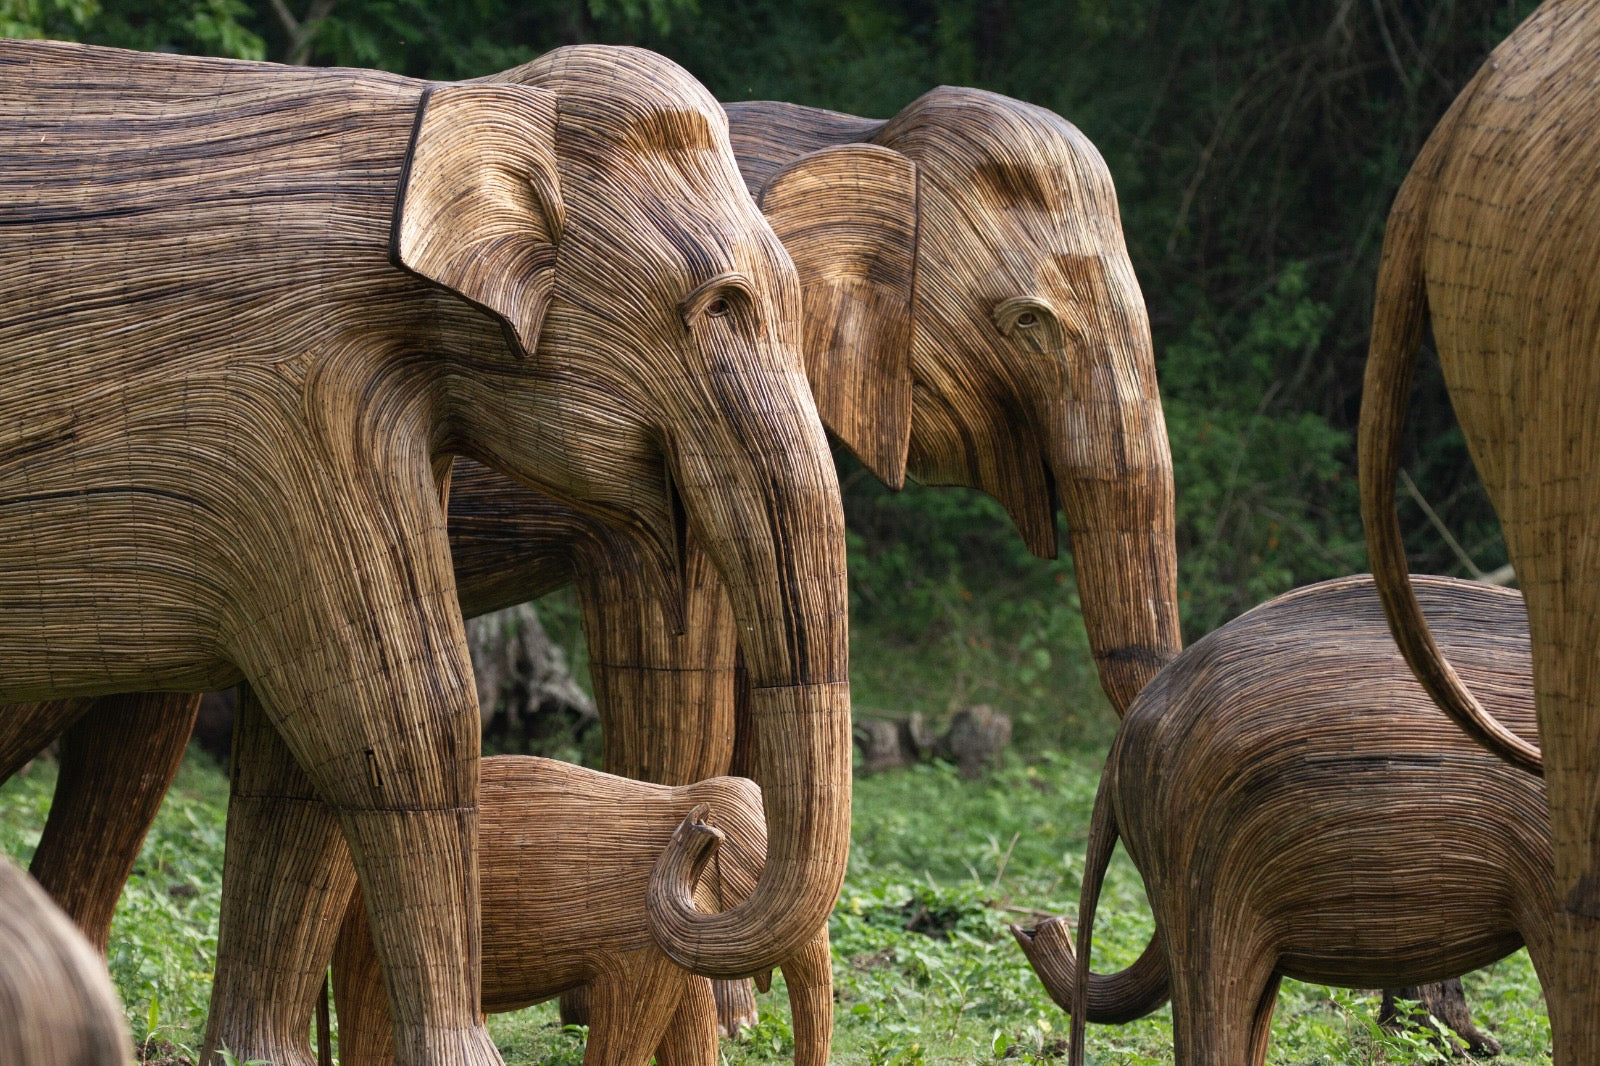 the great elephant migration sculptures